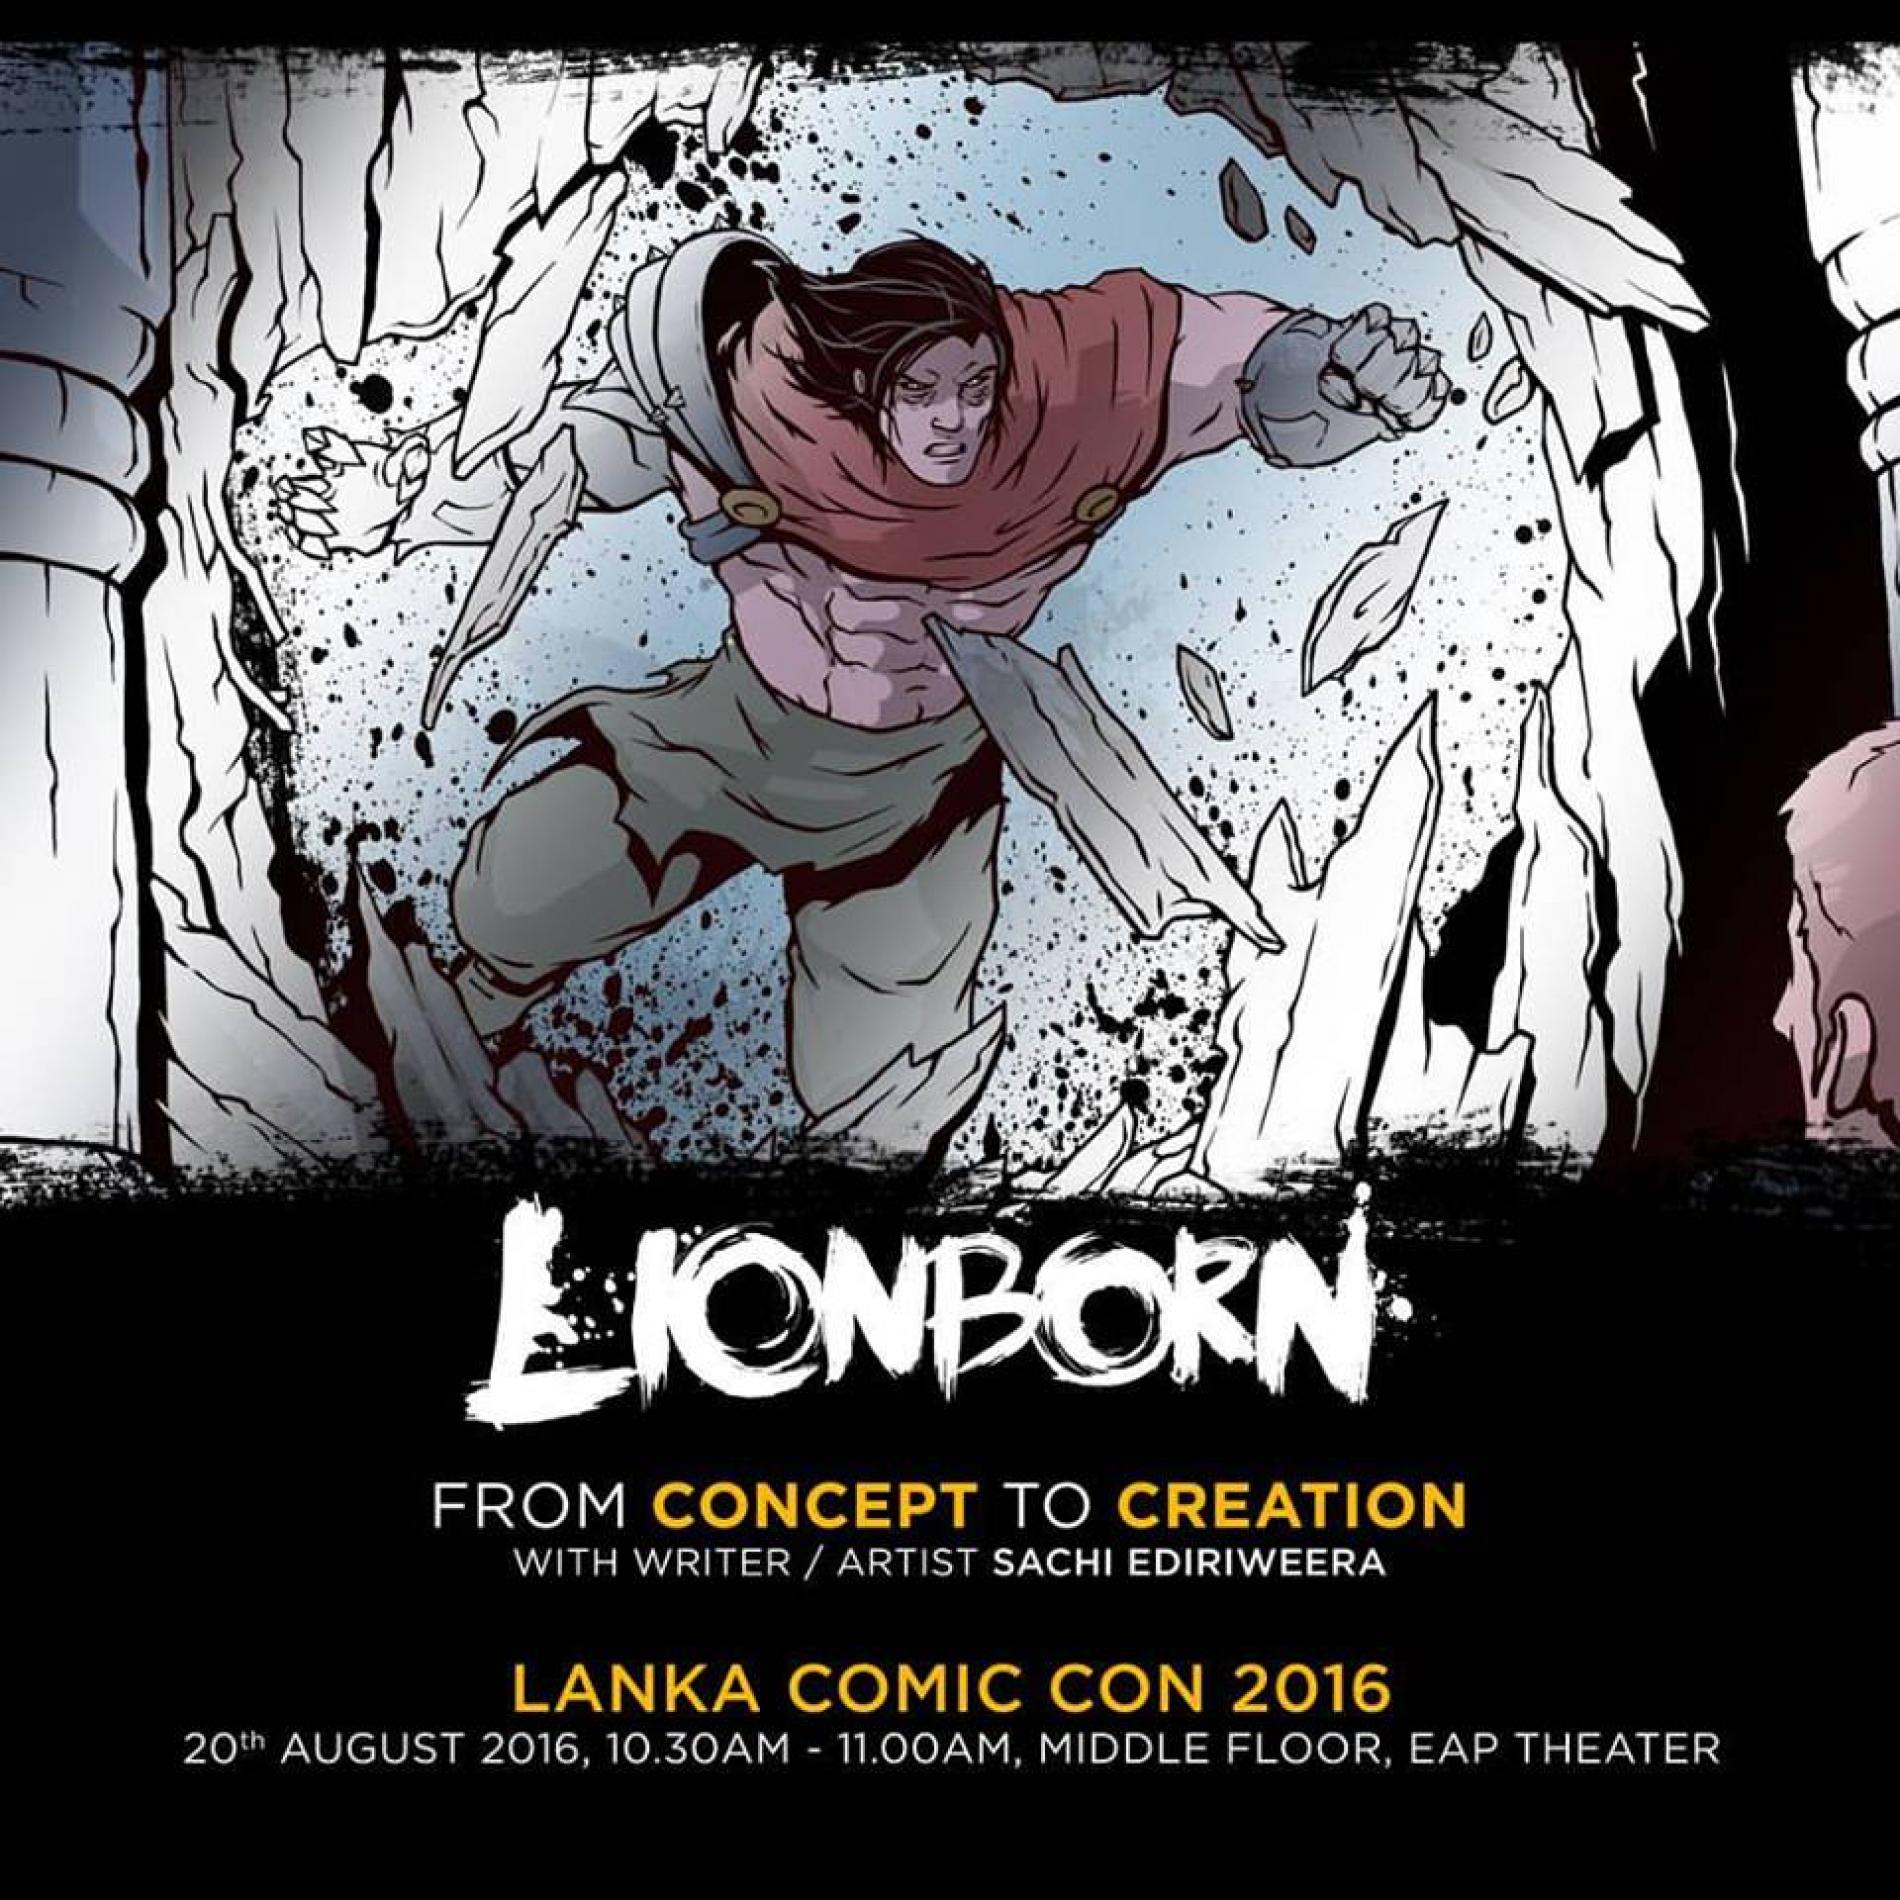 Sachi Ediriweera To Talk About ”LionBorn’ At The Lanka Comic Con